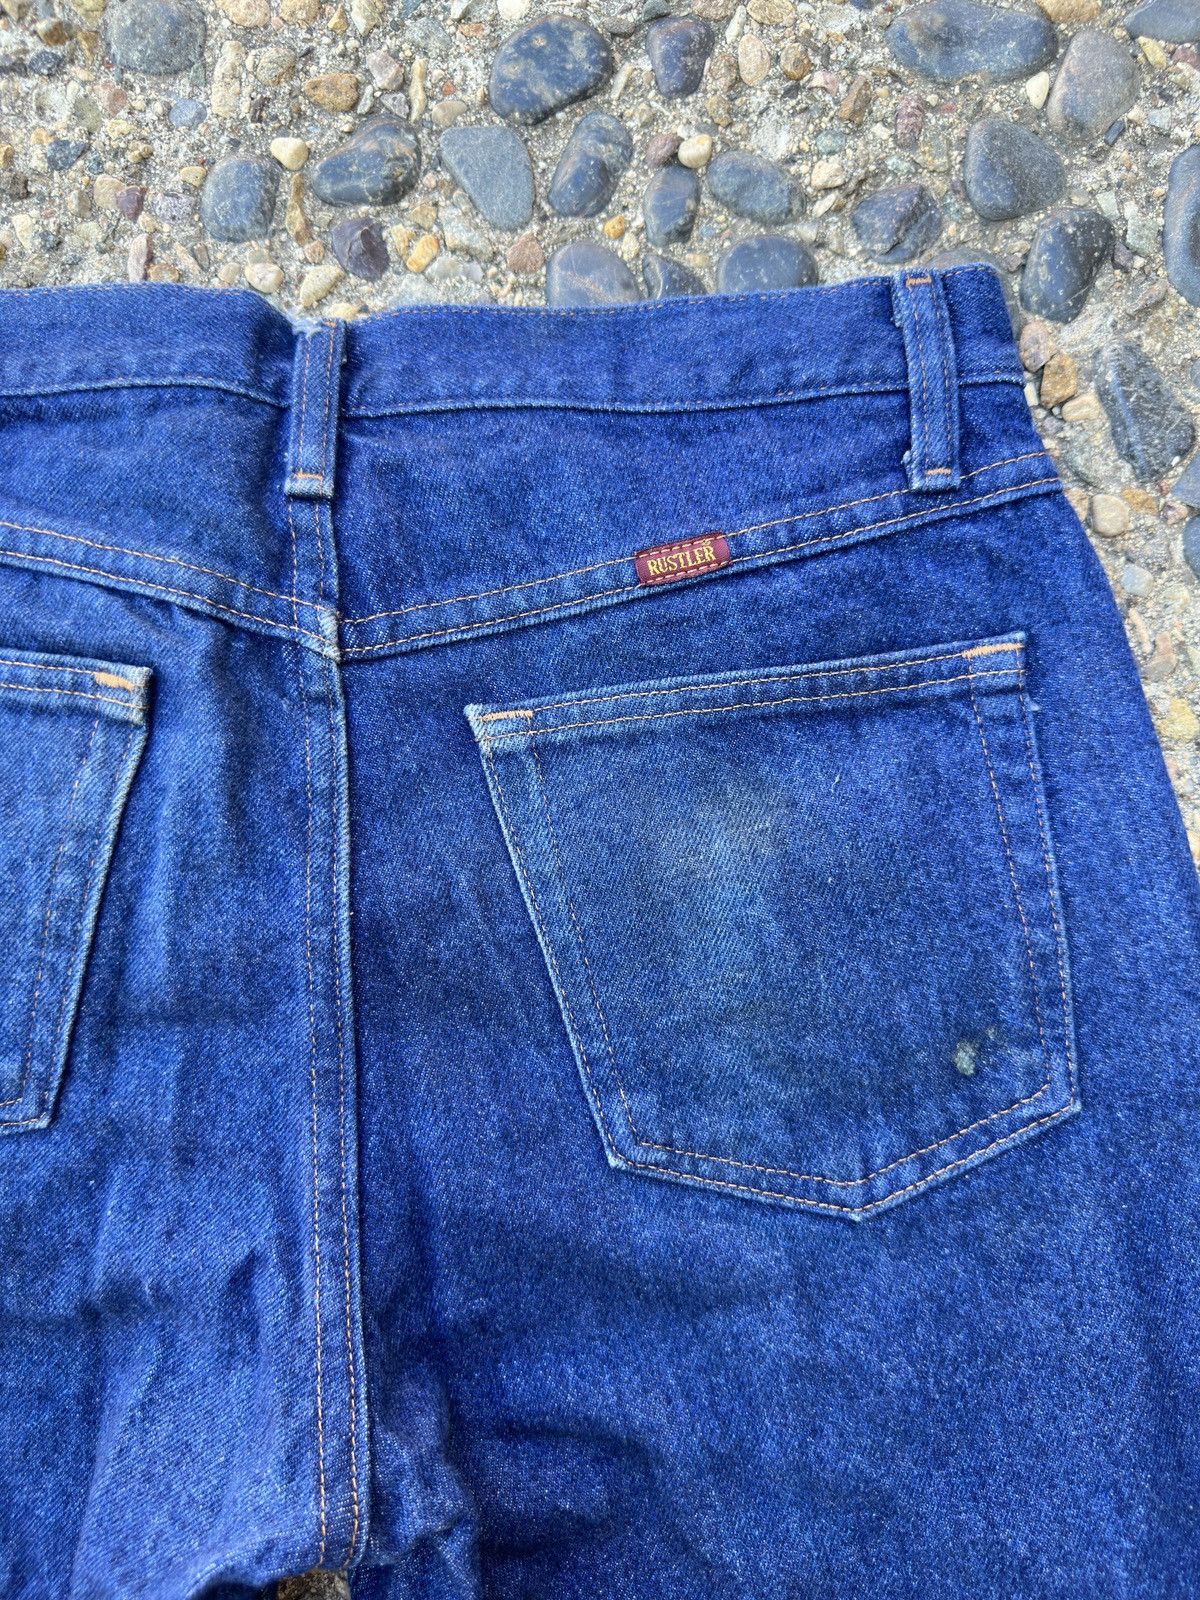 Vintage Vintage Rustler Jeans Size 31x30 Size US 30 / EU 46 - 9 Thumbnail